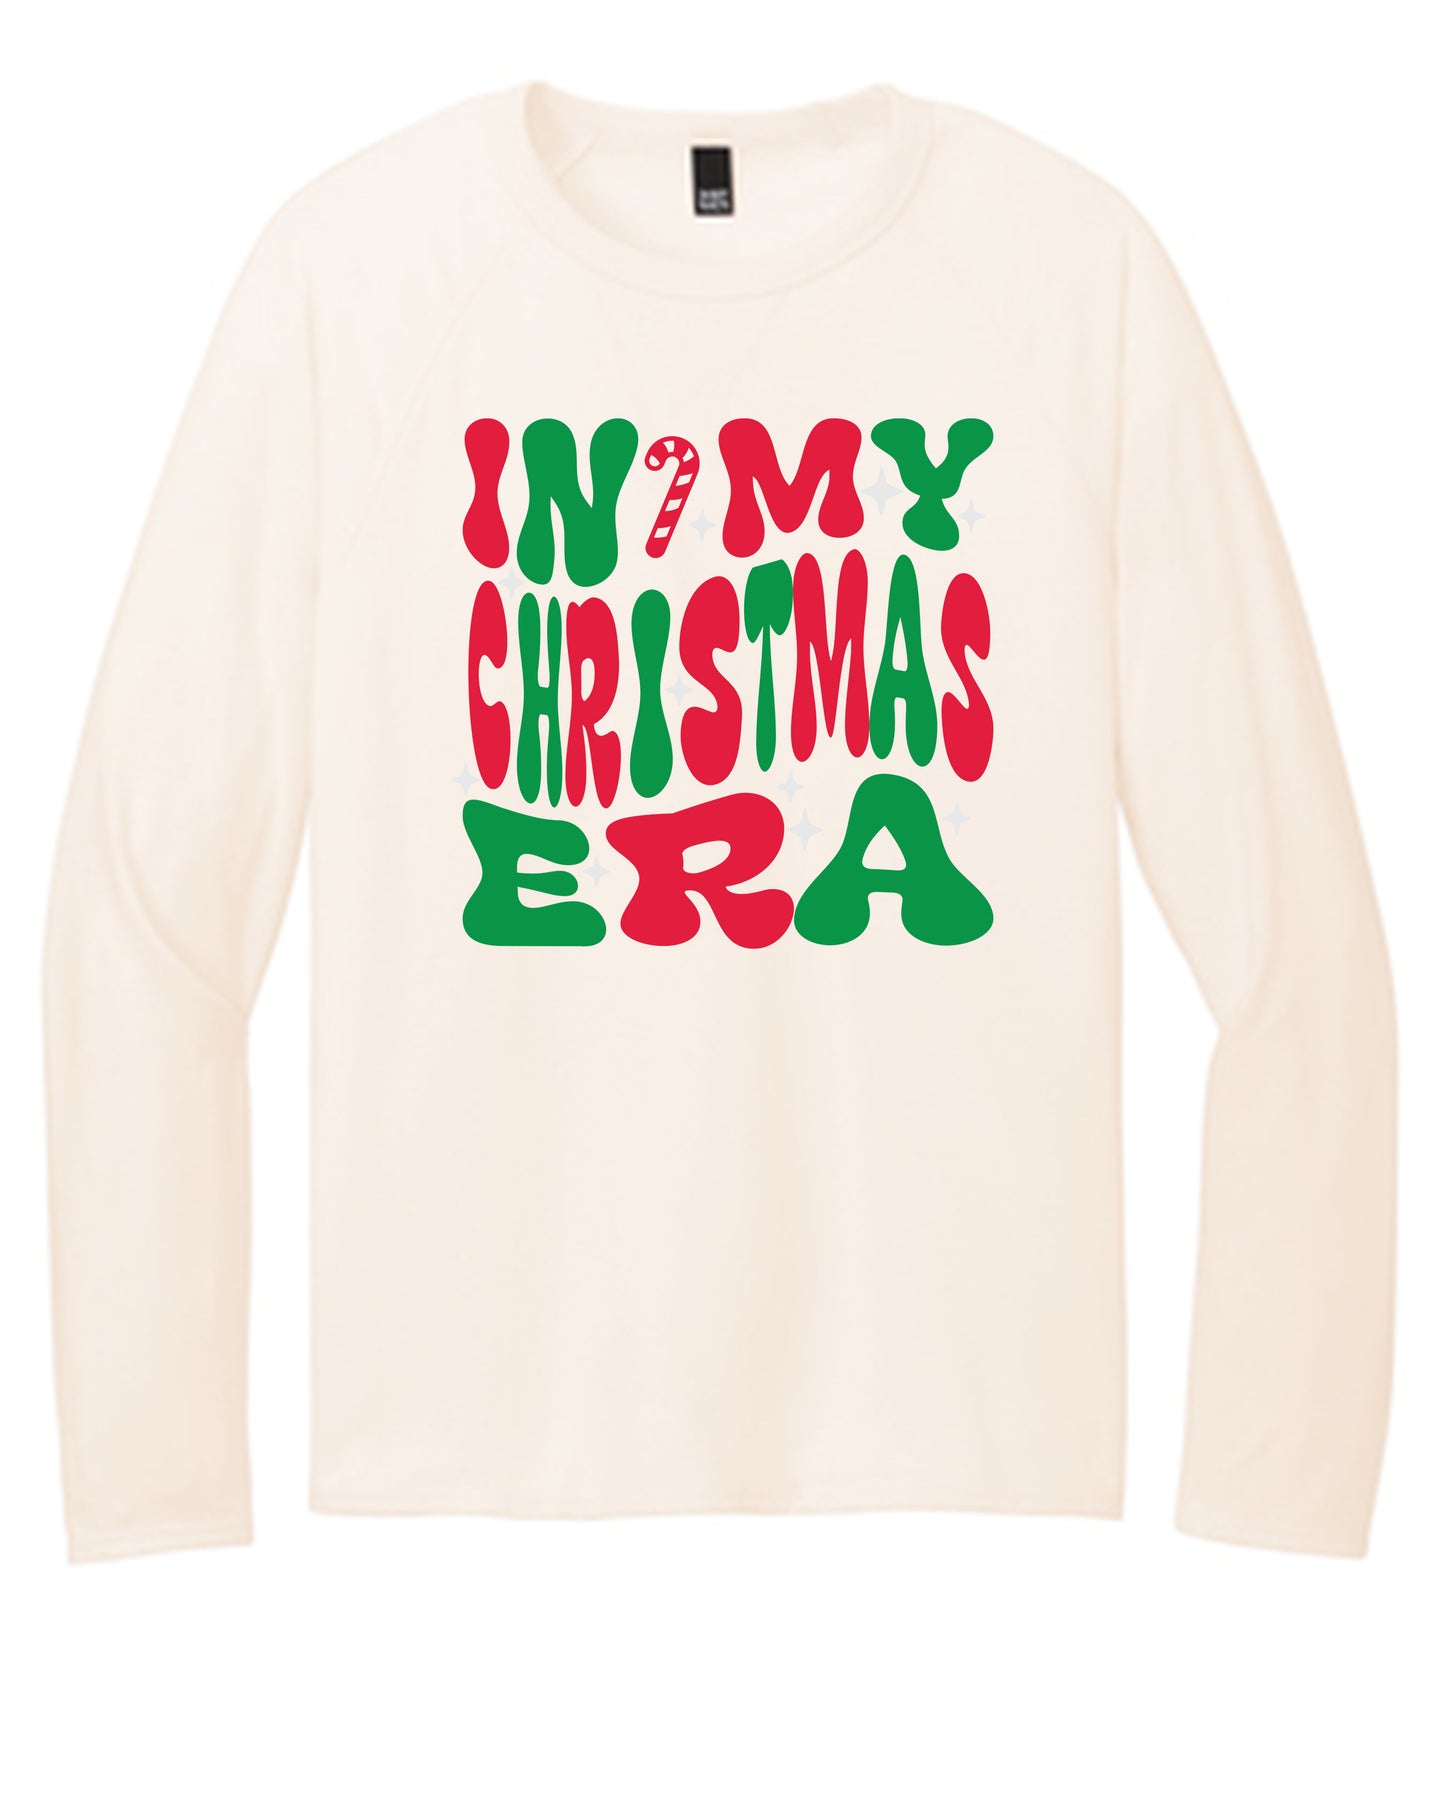 Christmas Shirt / Hoodie Designs